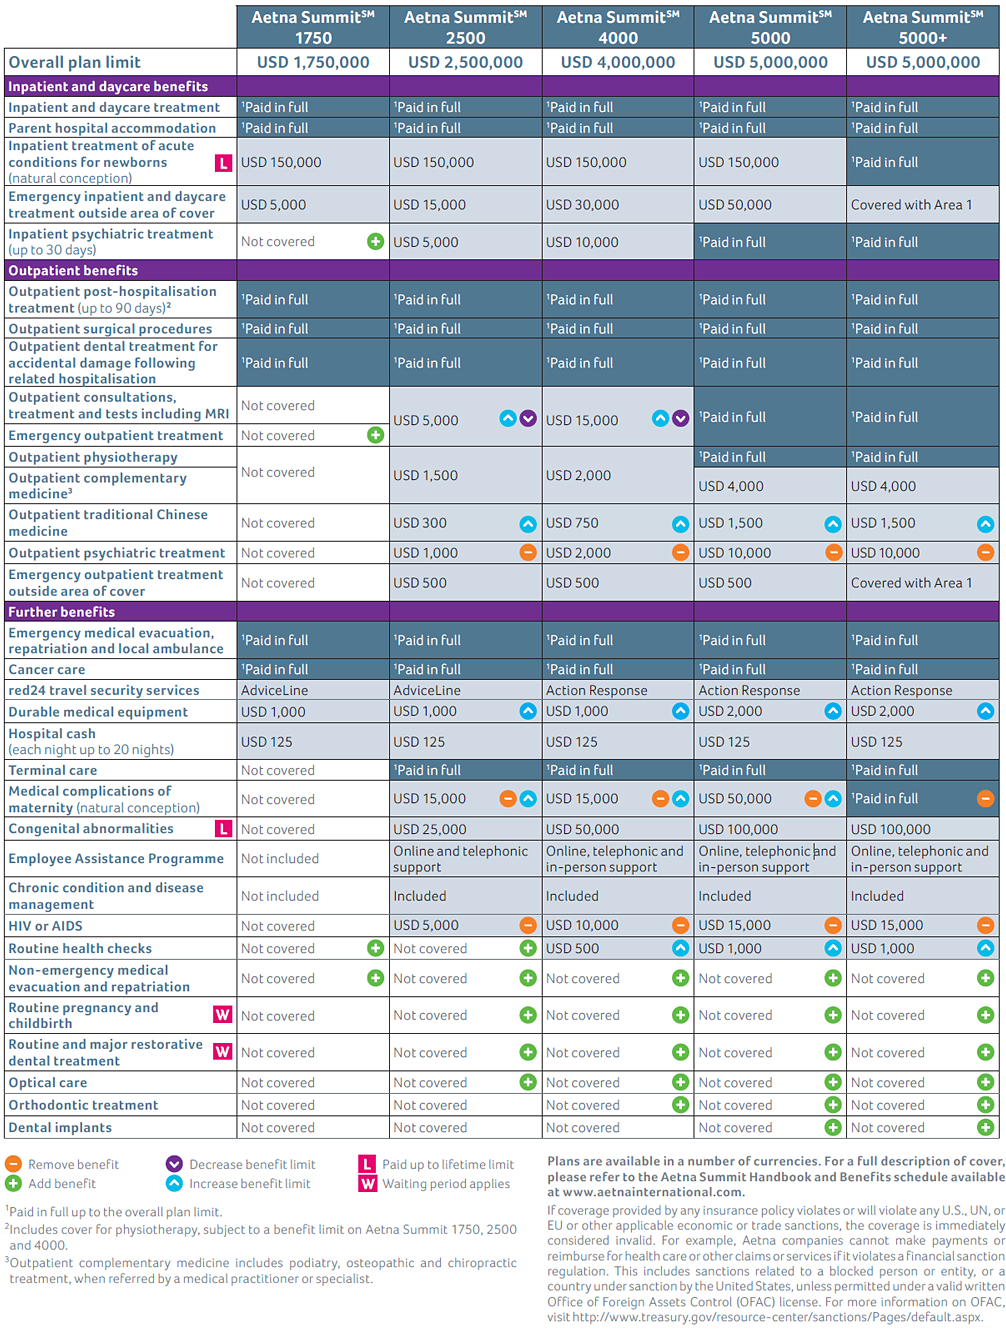 Aetna Medical Plan Comparison Chart